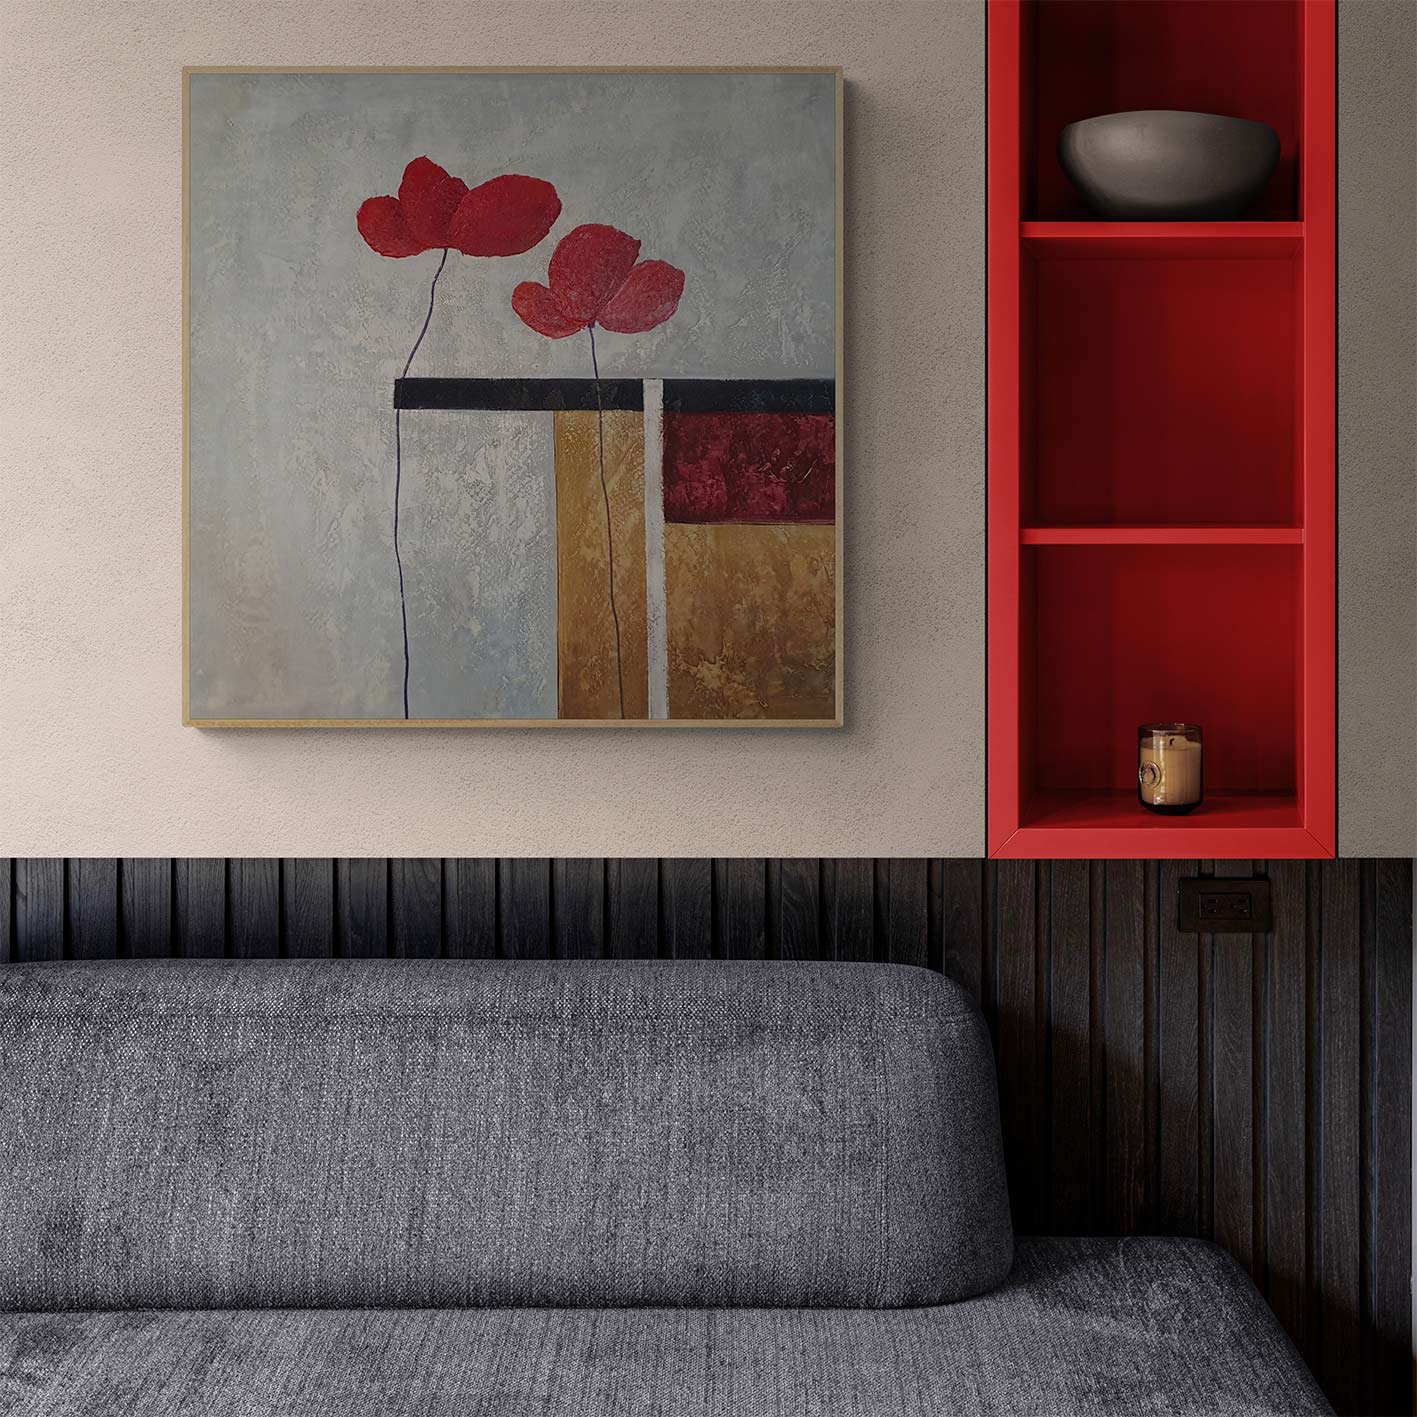 Red Poppy II painting 80x80 cm